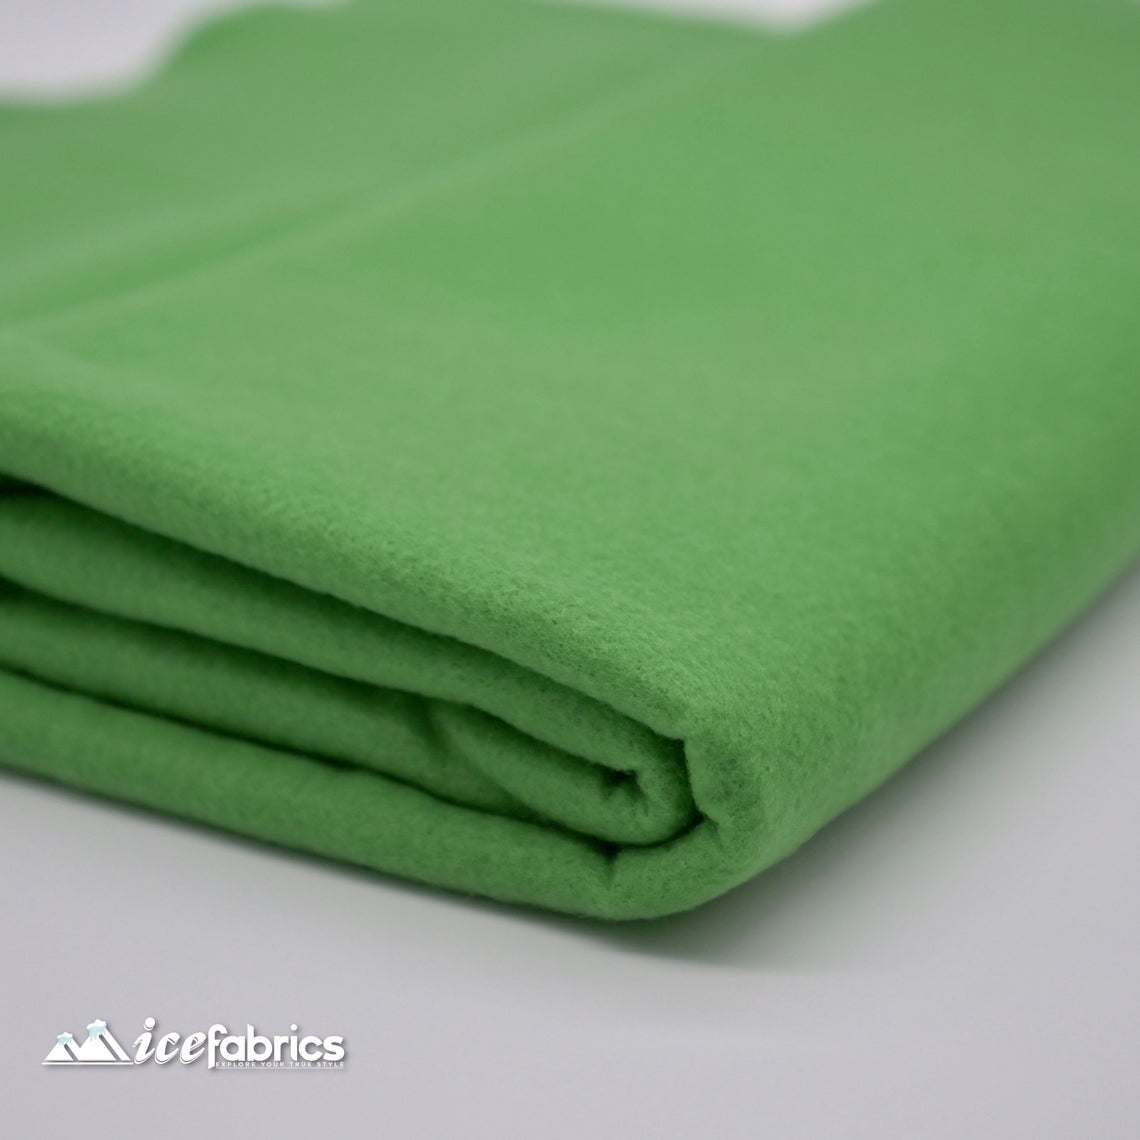 72" Wide 1.6 mm Thick Acrylic Lime Green Felt Fabric By The YardICE FABRICSICE FABRICSPer Yard1.6mm Thick72" Wide 1.6 mm Thick Acrylic Lime Green Felt Fabric By The Yard ICE FABRICS